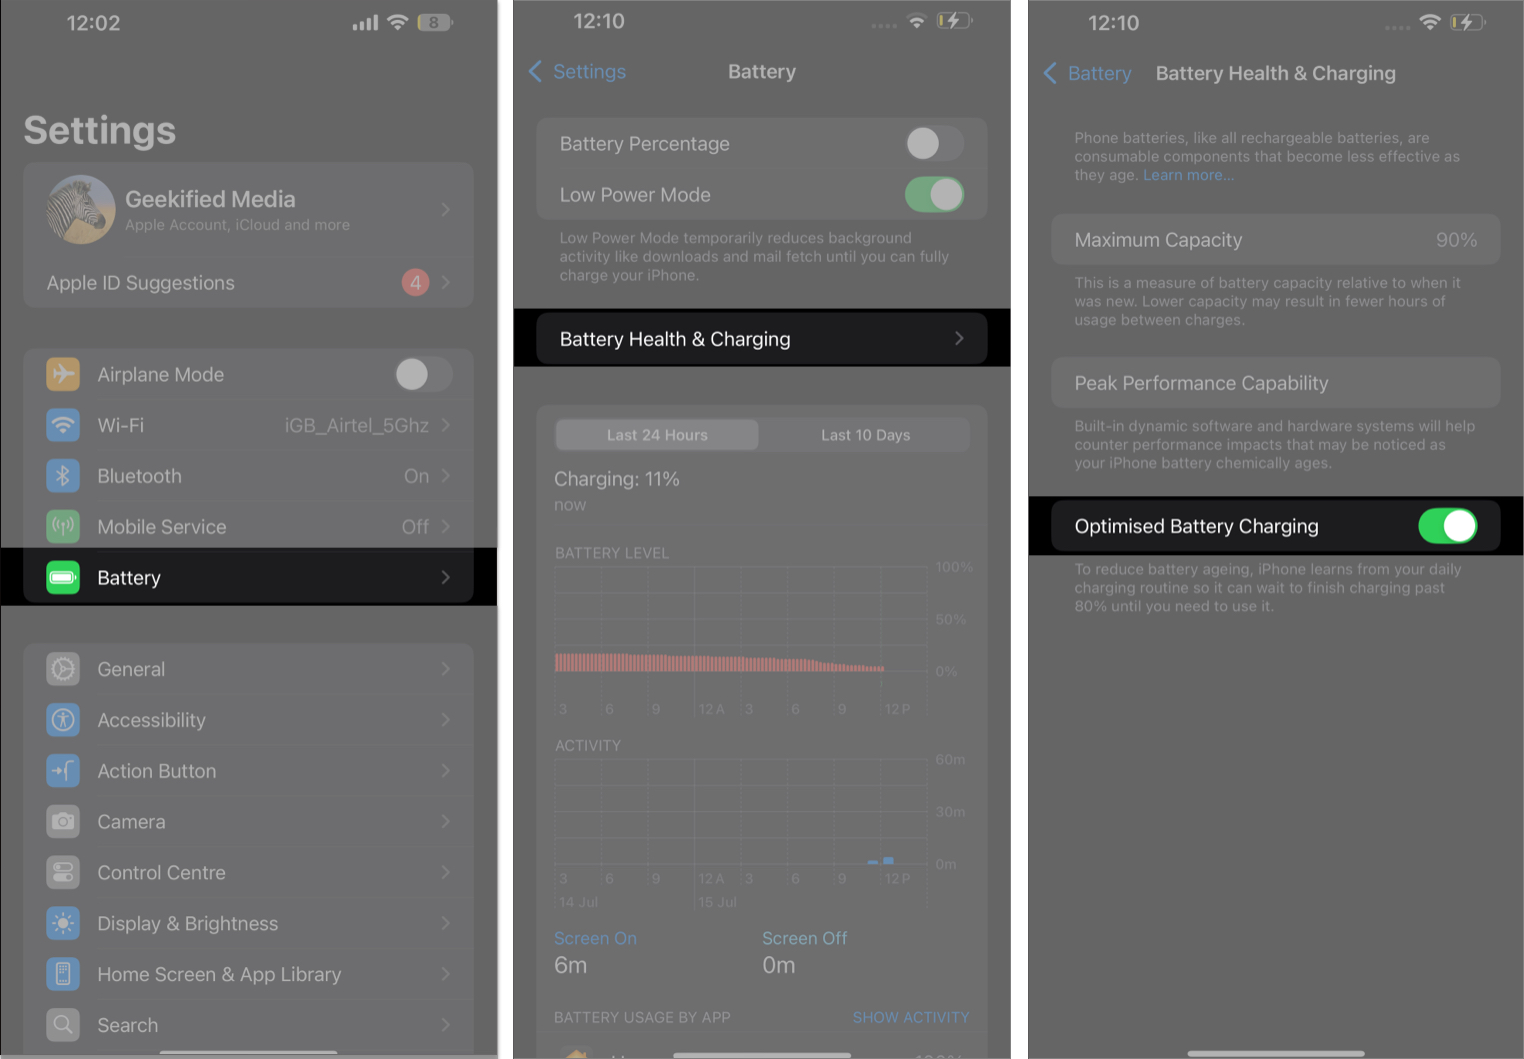 Battery Health & Charging screen in iPhone Settings app.